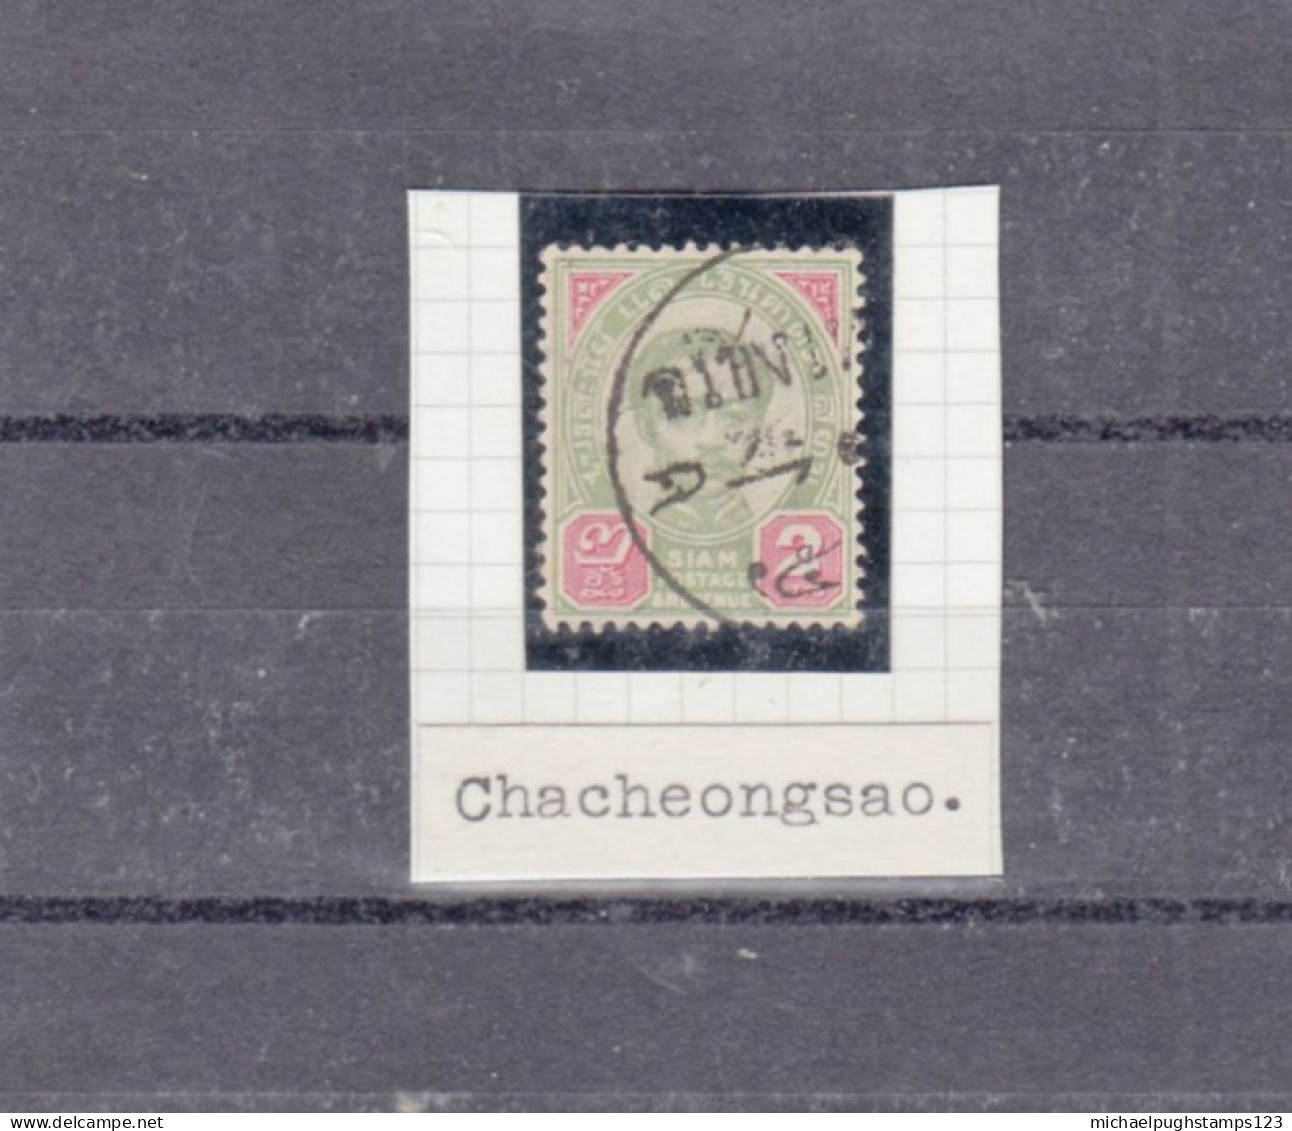 Thailand / Stamps / Chacheongsao Native Postmarks - Thailand